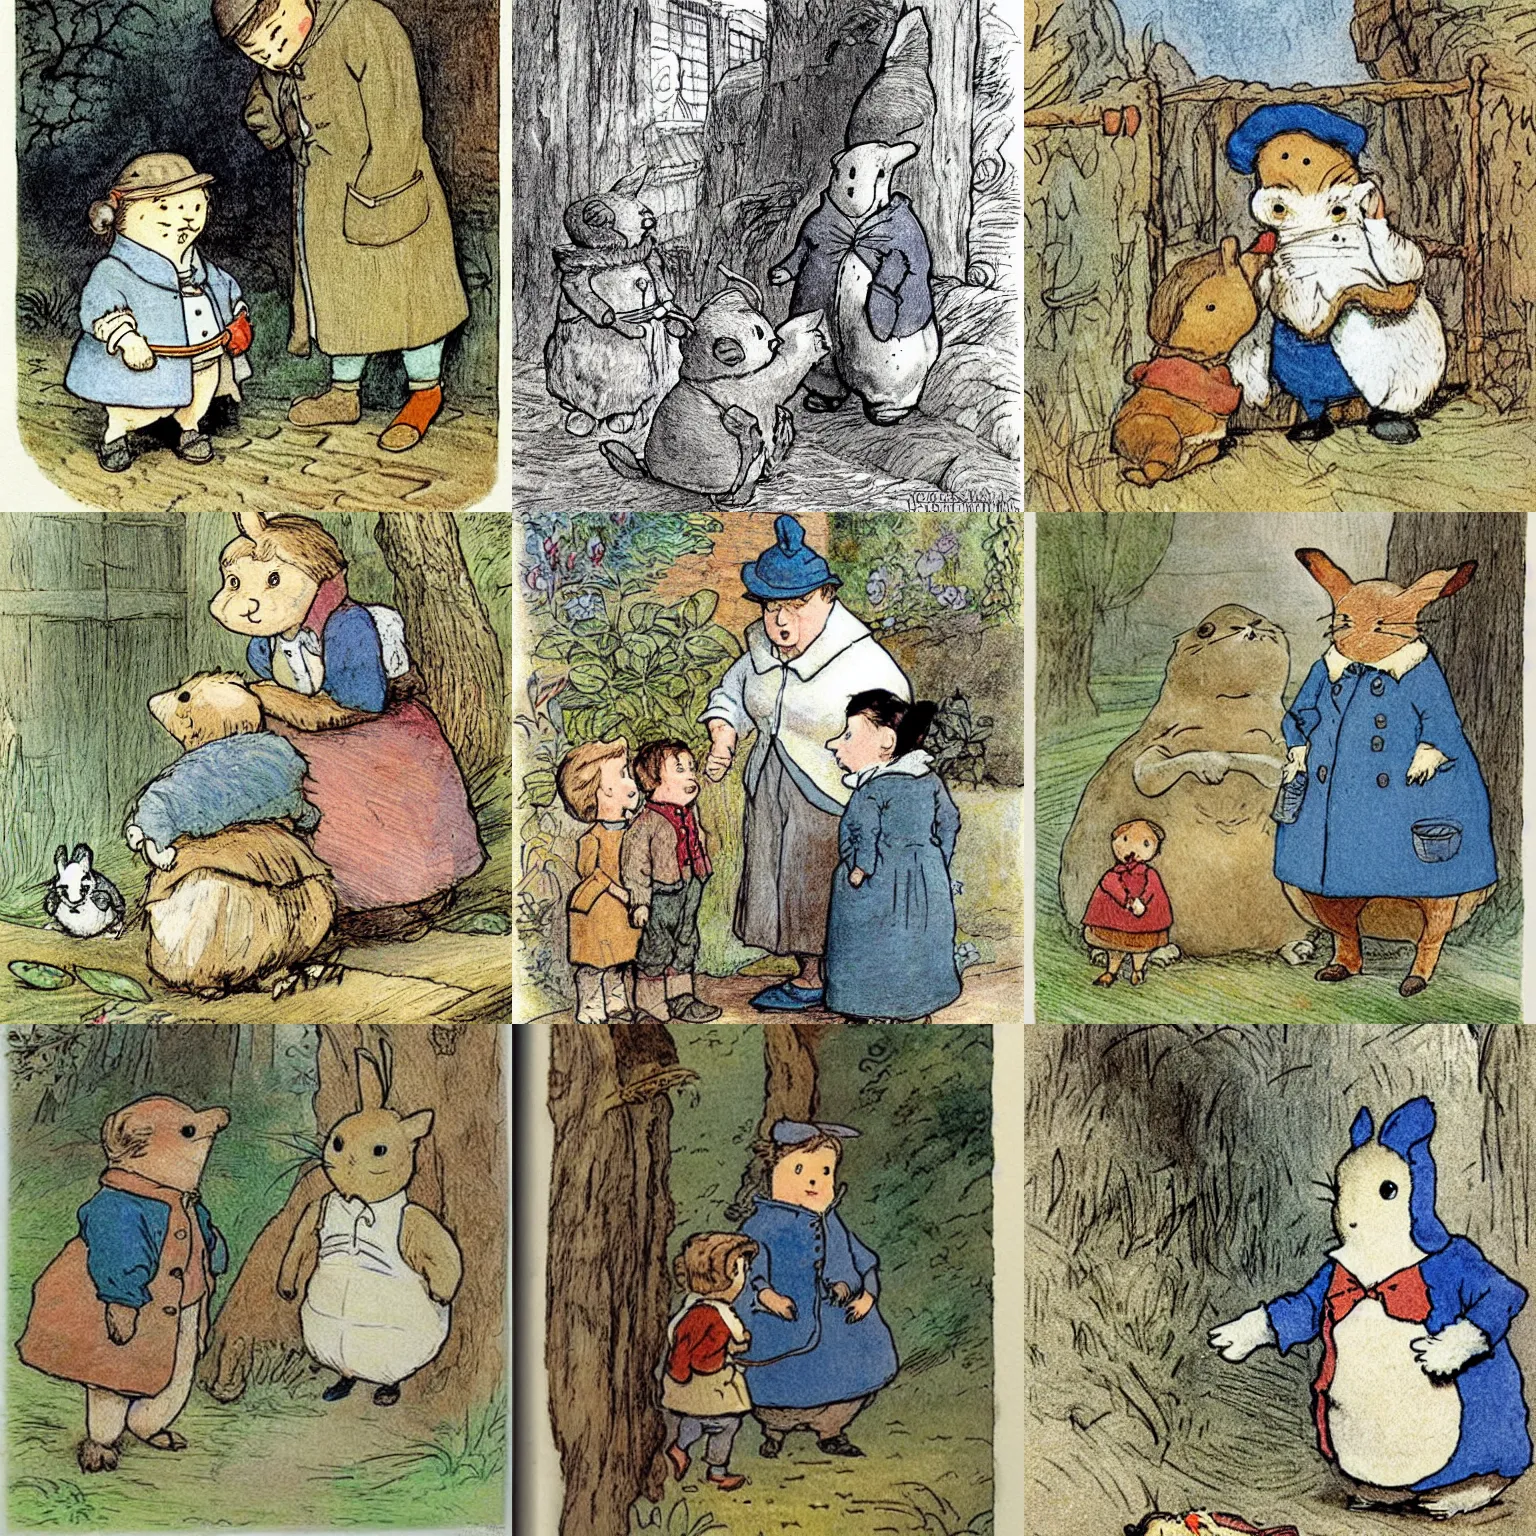 Prompt: Gigachad, childerns story book illustration by Beatrix Potter